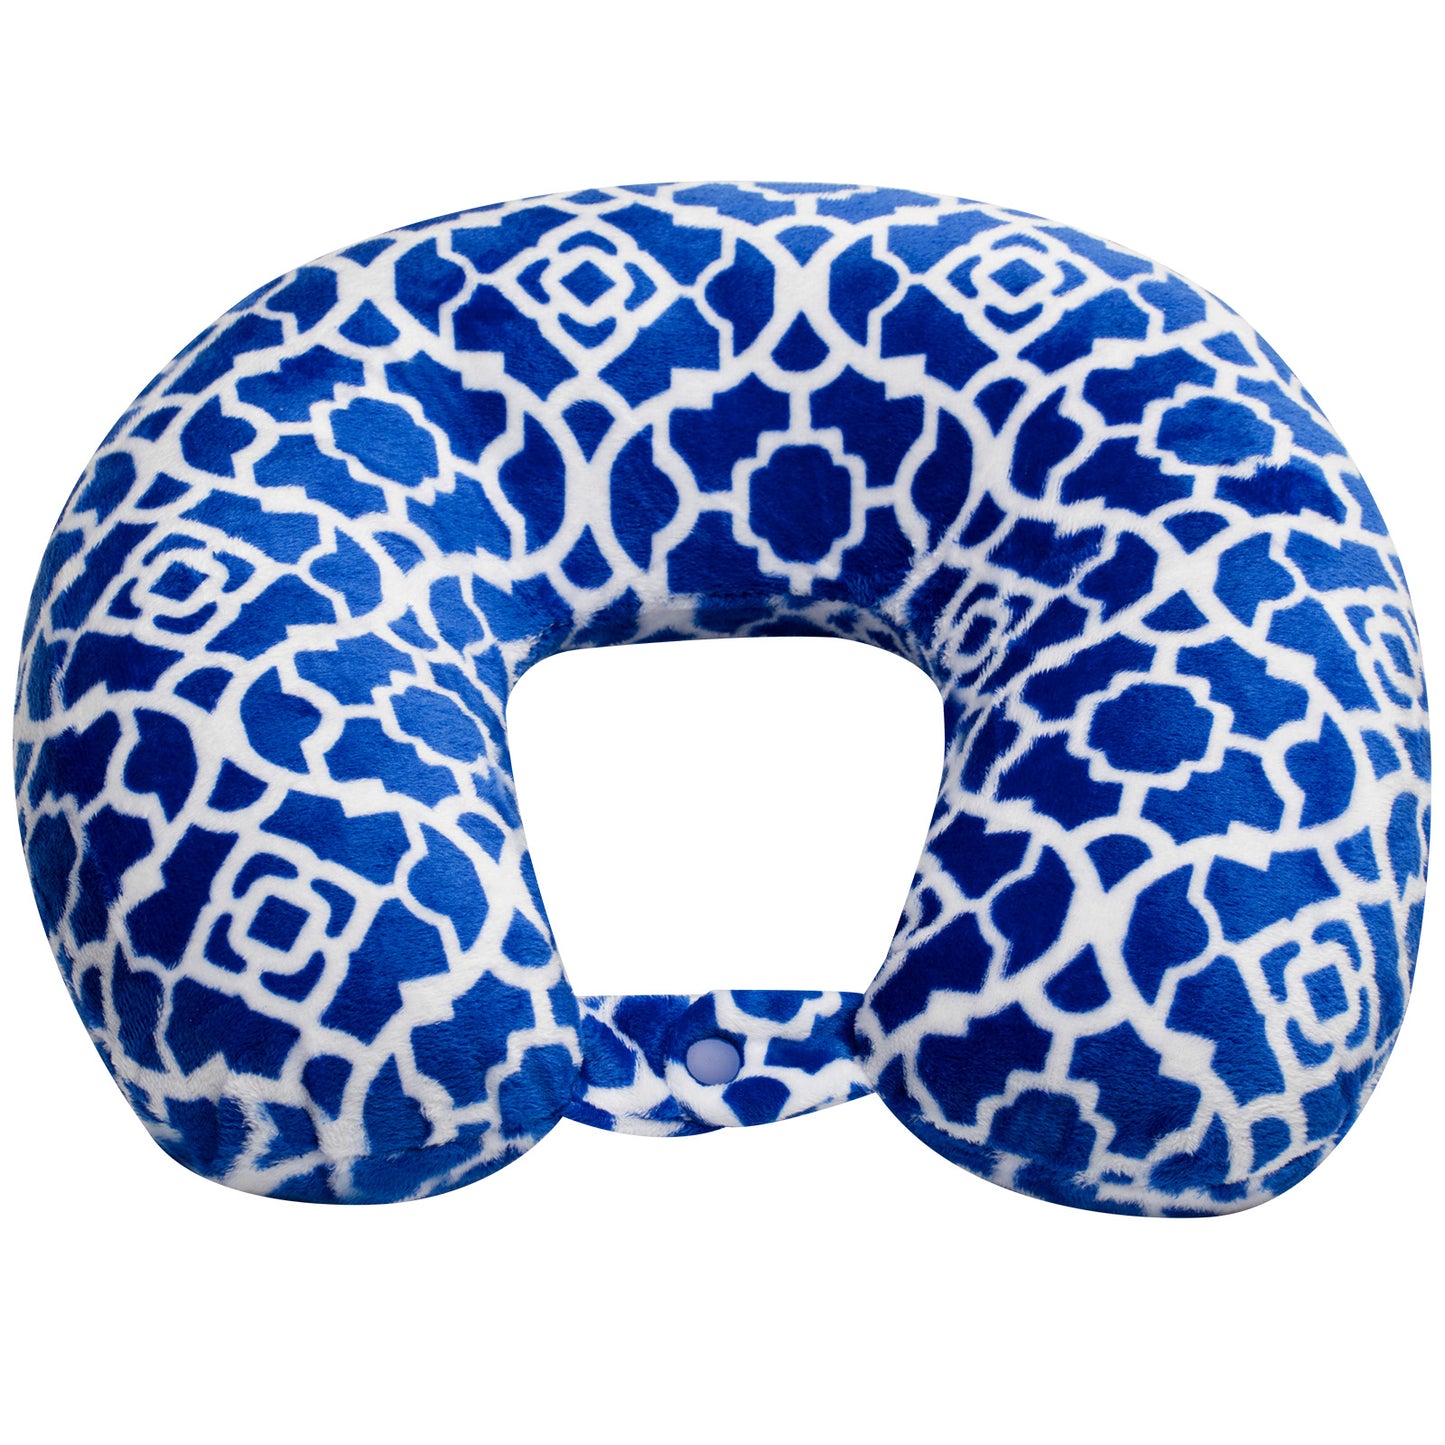 Fiber Filled Travel Neck Pillow - Adult - Core Prints - 12" x 12"